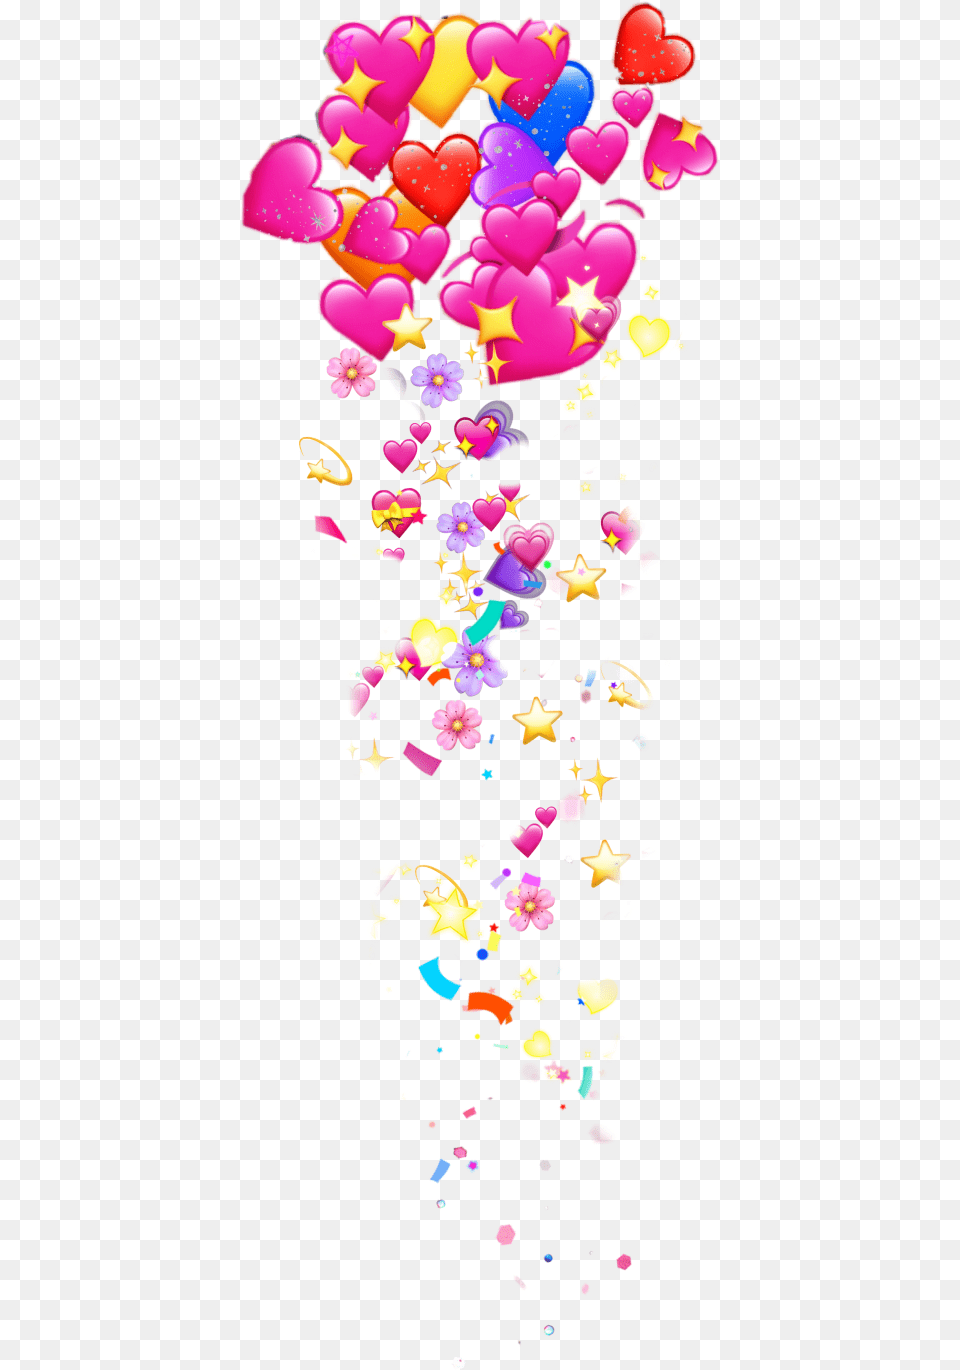 Clip Art, Paper, Balloon, Confetti Png Image